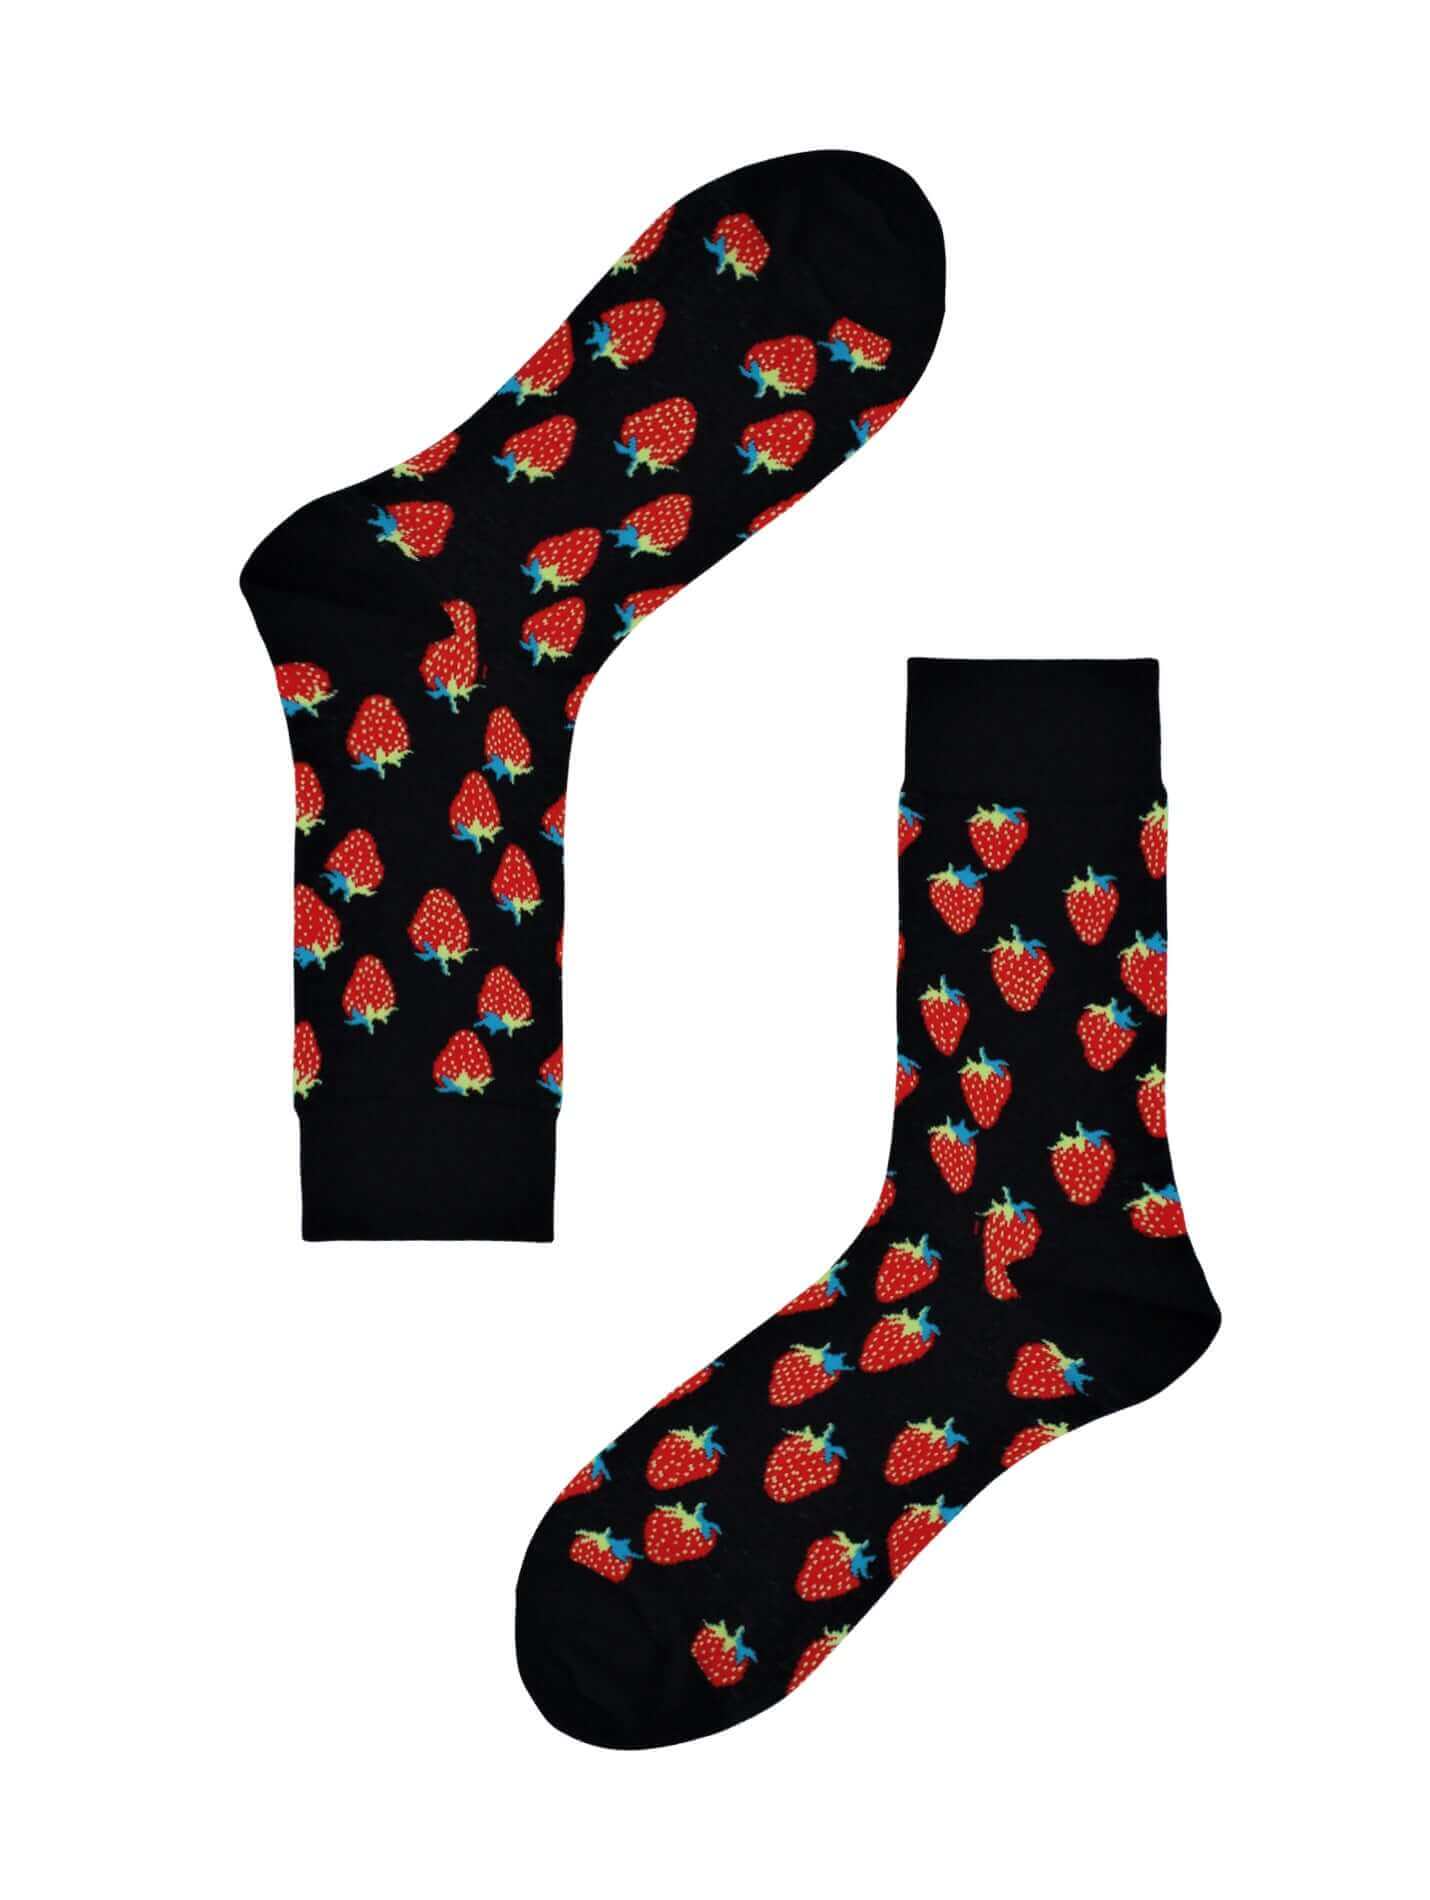 Sick Socks – Strawberry – Food Service Socks